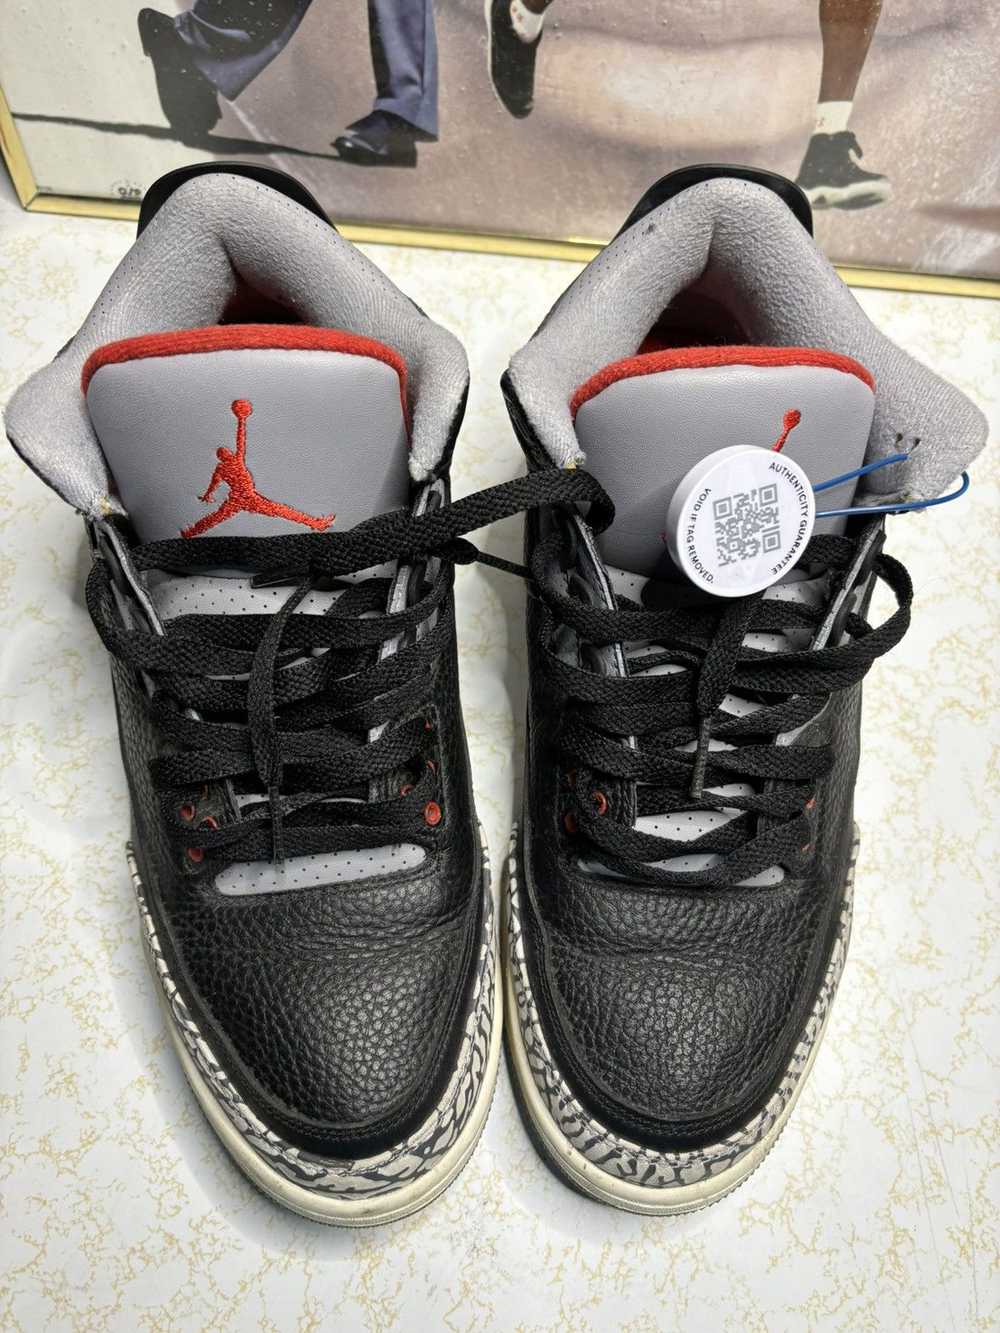 Jordan Brand Jordan 3 Retro Black Cement 2018 - image 2